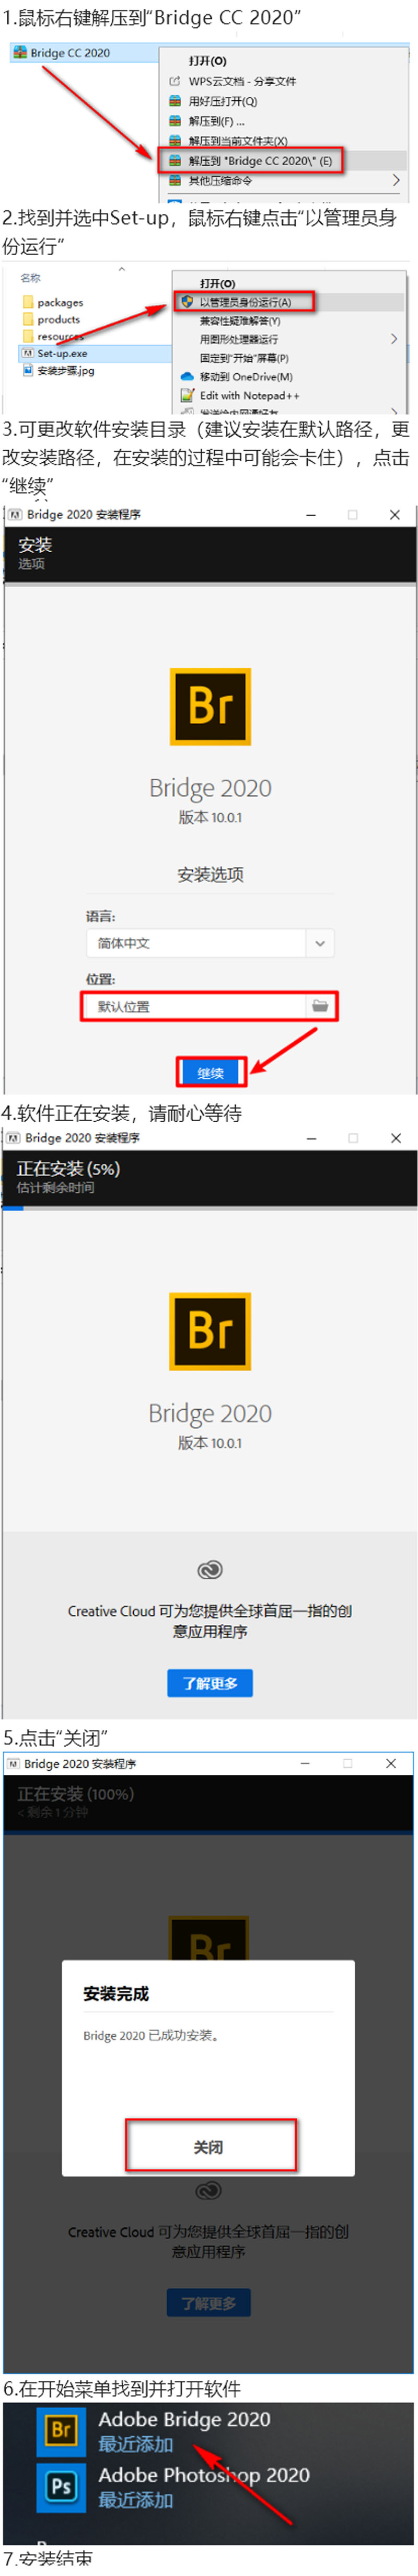 Adobe Bridge 2020װ̳.jpg